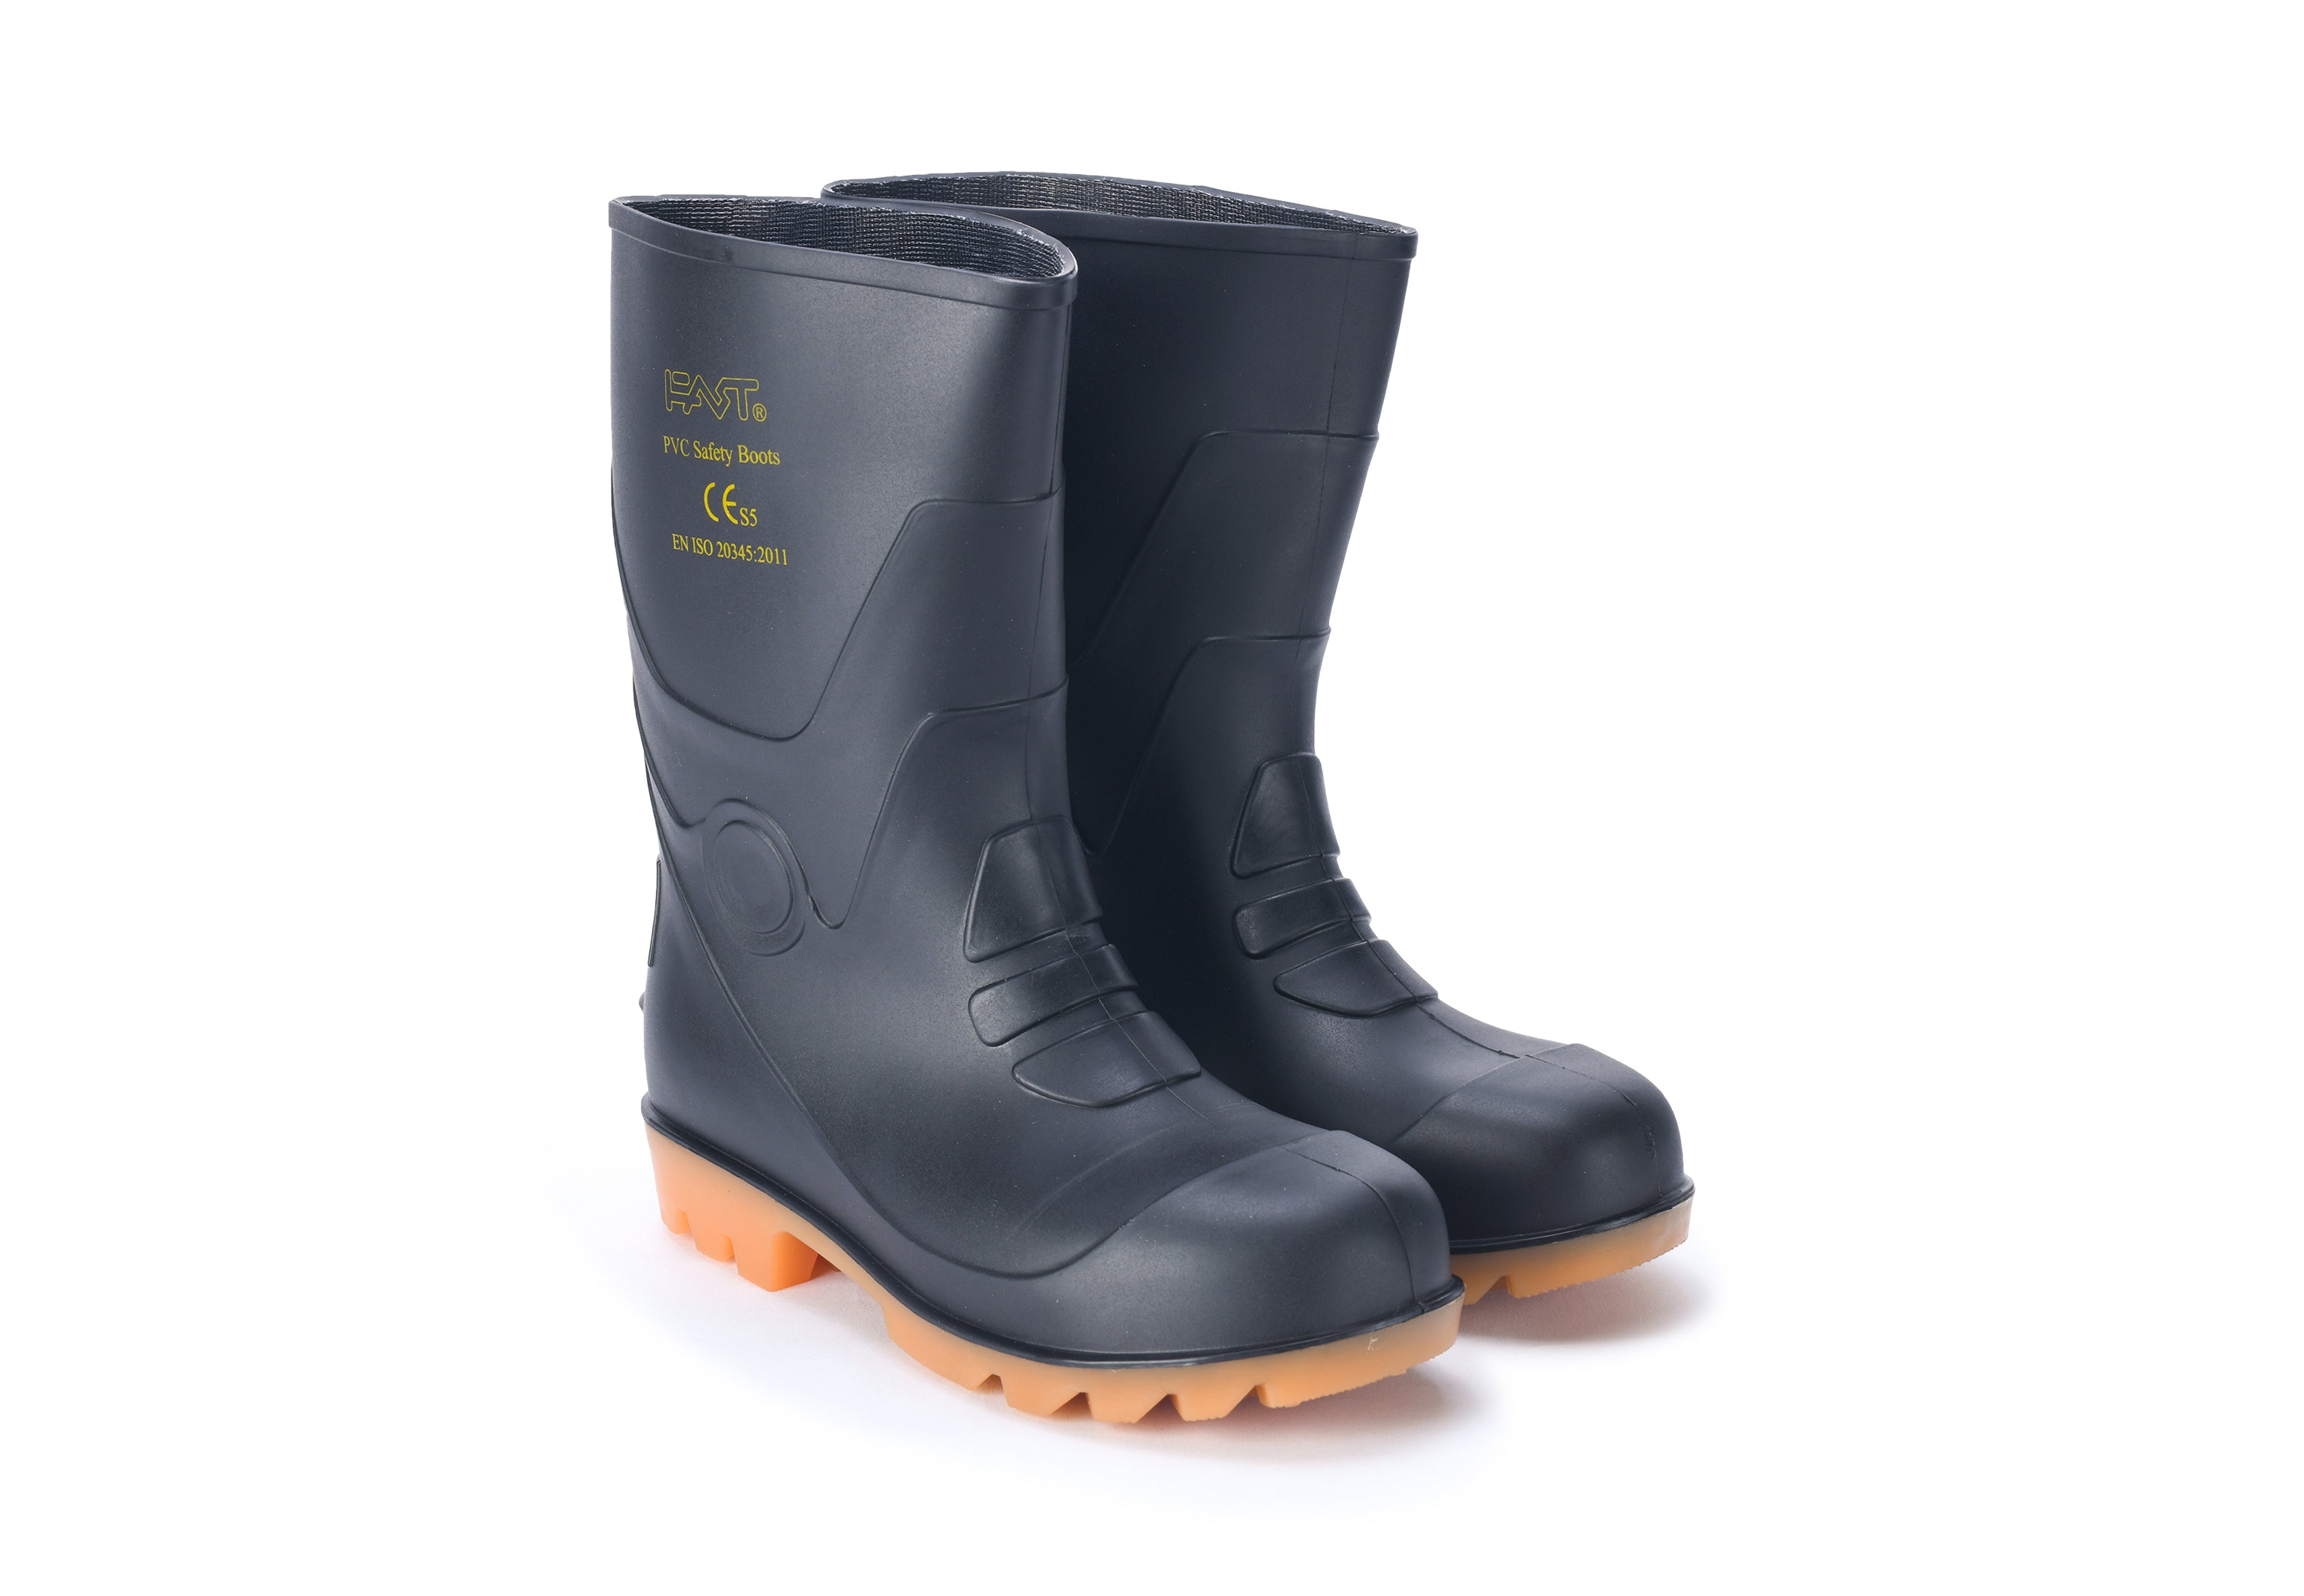 Safety Short Rain Boots (Steel Toe Cap + Steel Soles)-FAST-BK-EU Size: 37-偉豐鞋 WELL SHOE HK-Well Shoe-偉豐鞋-偉豐網-荃灣鞋店-Functional shoes-Hong Kong Tsuen Wan Shoe Store-Tai Wan Shoe-Japan Shoe-高品質功能鞋-台灣進口鞋-日本進口鞋-High-quality shoes-鞋類配件-荃灣進口鞋-香港鞋店-優質鞋類產品-水靴-帆布鞋-廚師鞋-香港鞋品牌-Hong Kong Shoes brand-長者鞋-Hong Kong Rain Boots-Kitchen shoes-Cruthes-Slipper-Well Shoe Hong Kong-Anello-Arriba-休閒鞋-舒適鞋-健康鞋-皮鞋-Healthy shoes-Leather shoes-Hiking shoes